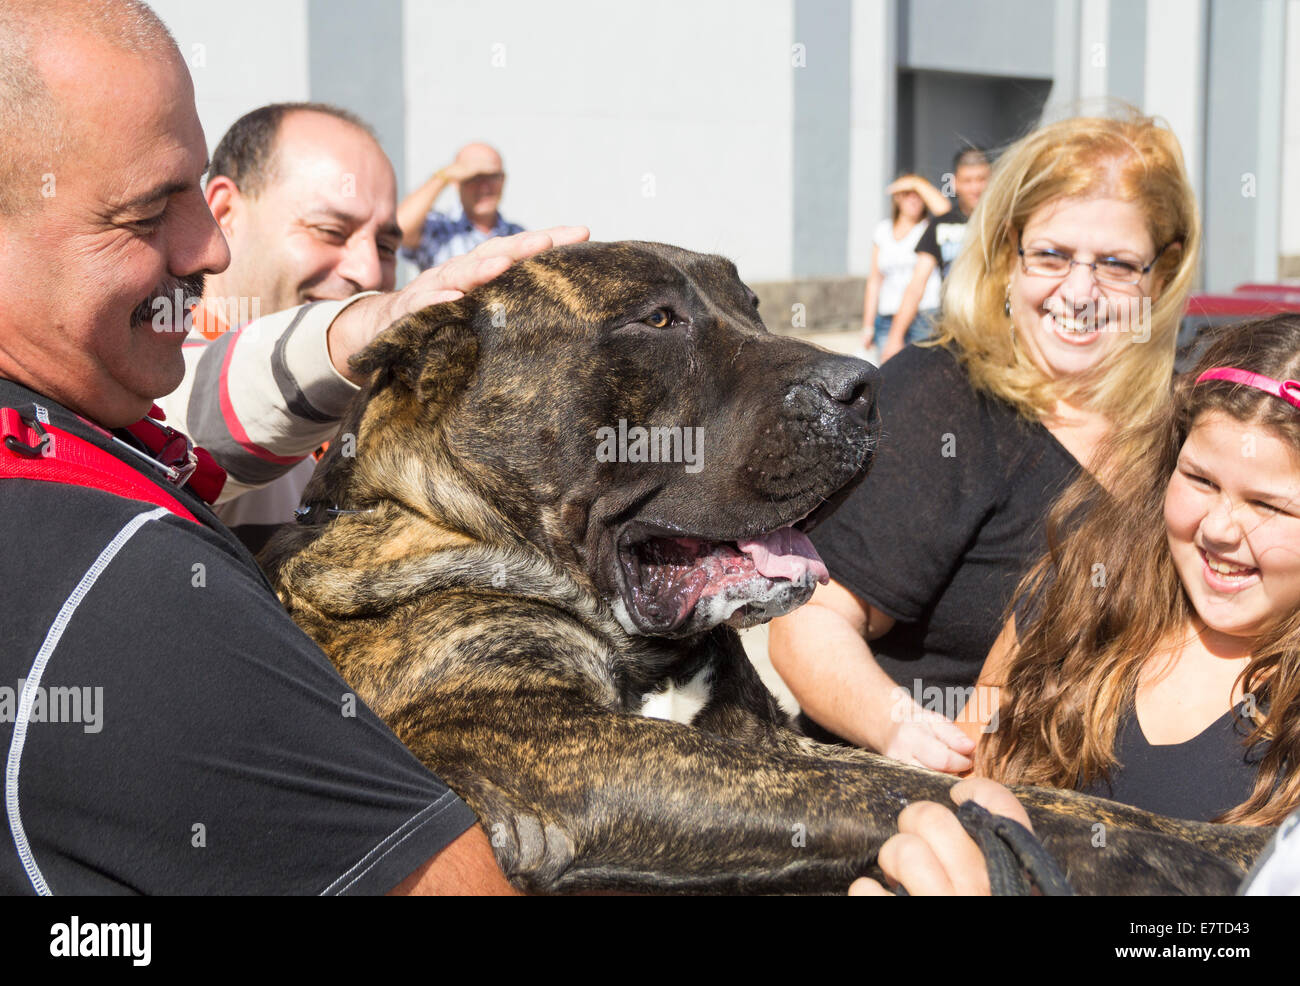 85 kilo Perro de Presa Canario au dog show dans les îles Canaries, Espagne Banque D'Images